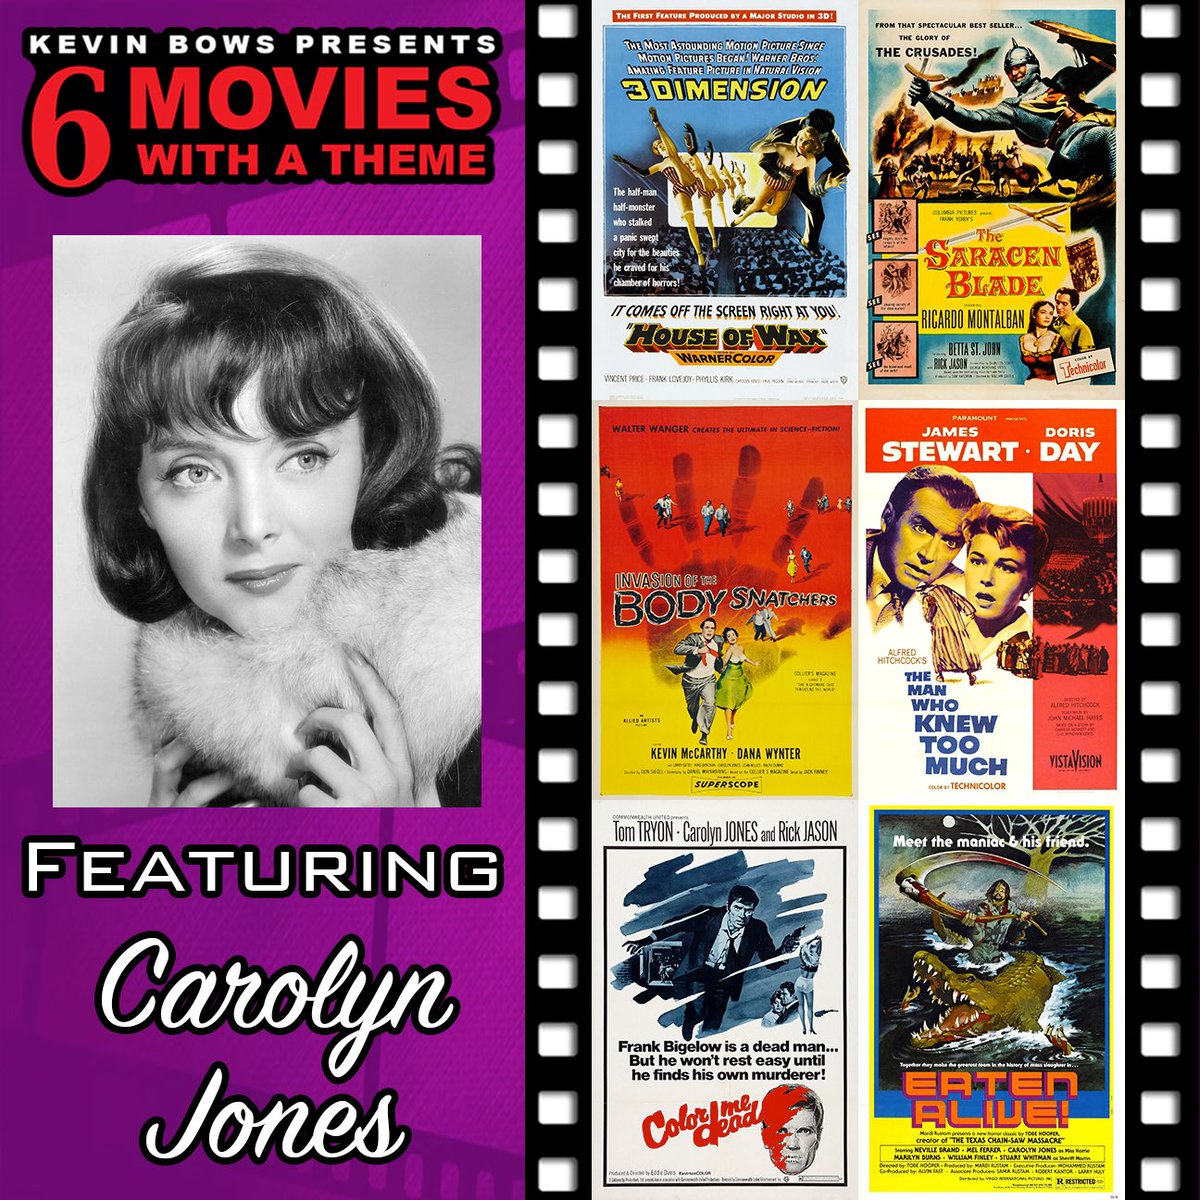 Born on this day: 
Carolyn Jones
#movie #movies #MoviePoster #HorrorMovies #HorrorCommunity #HorrorClassic #AdamsFamily